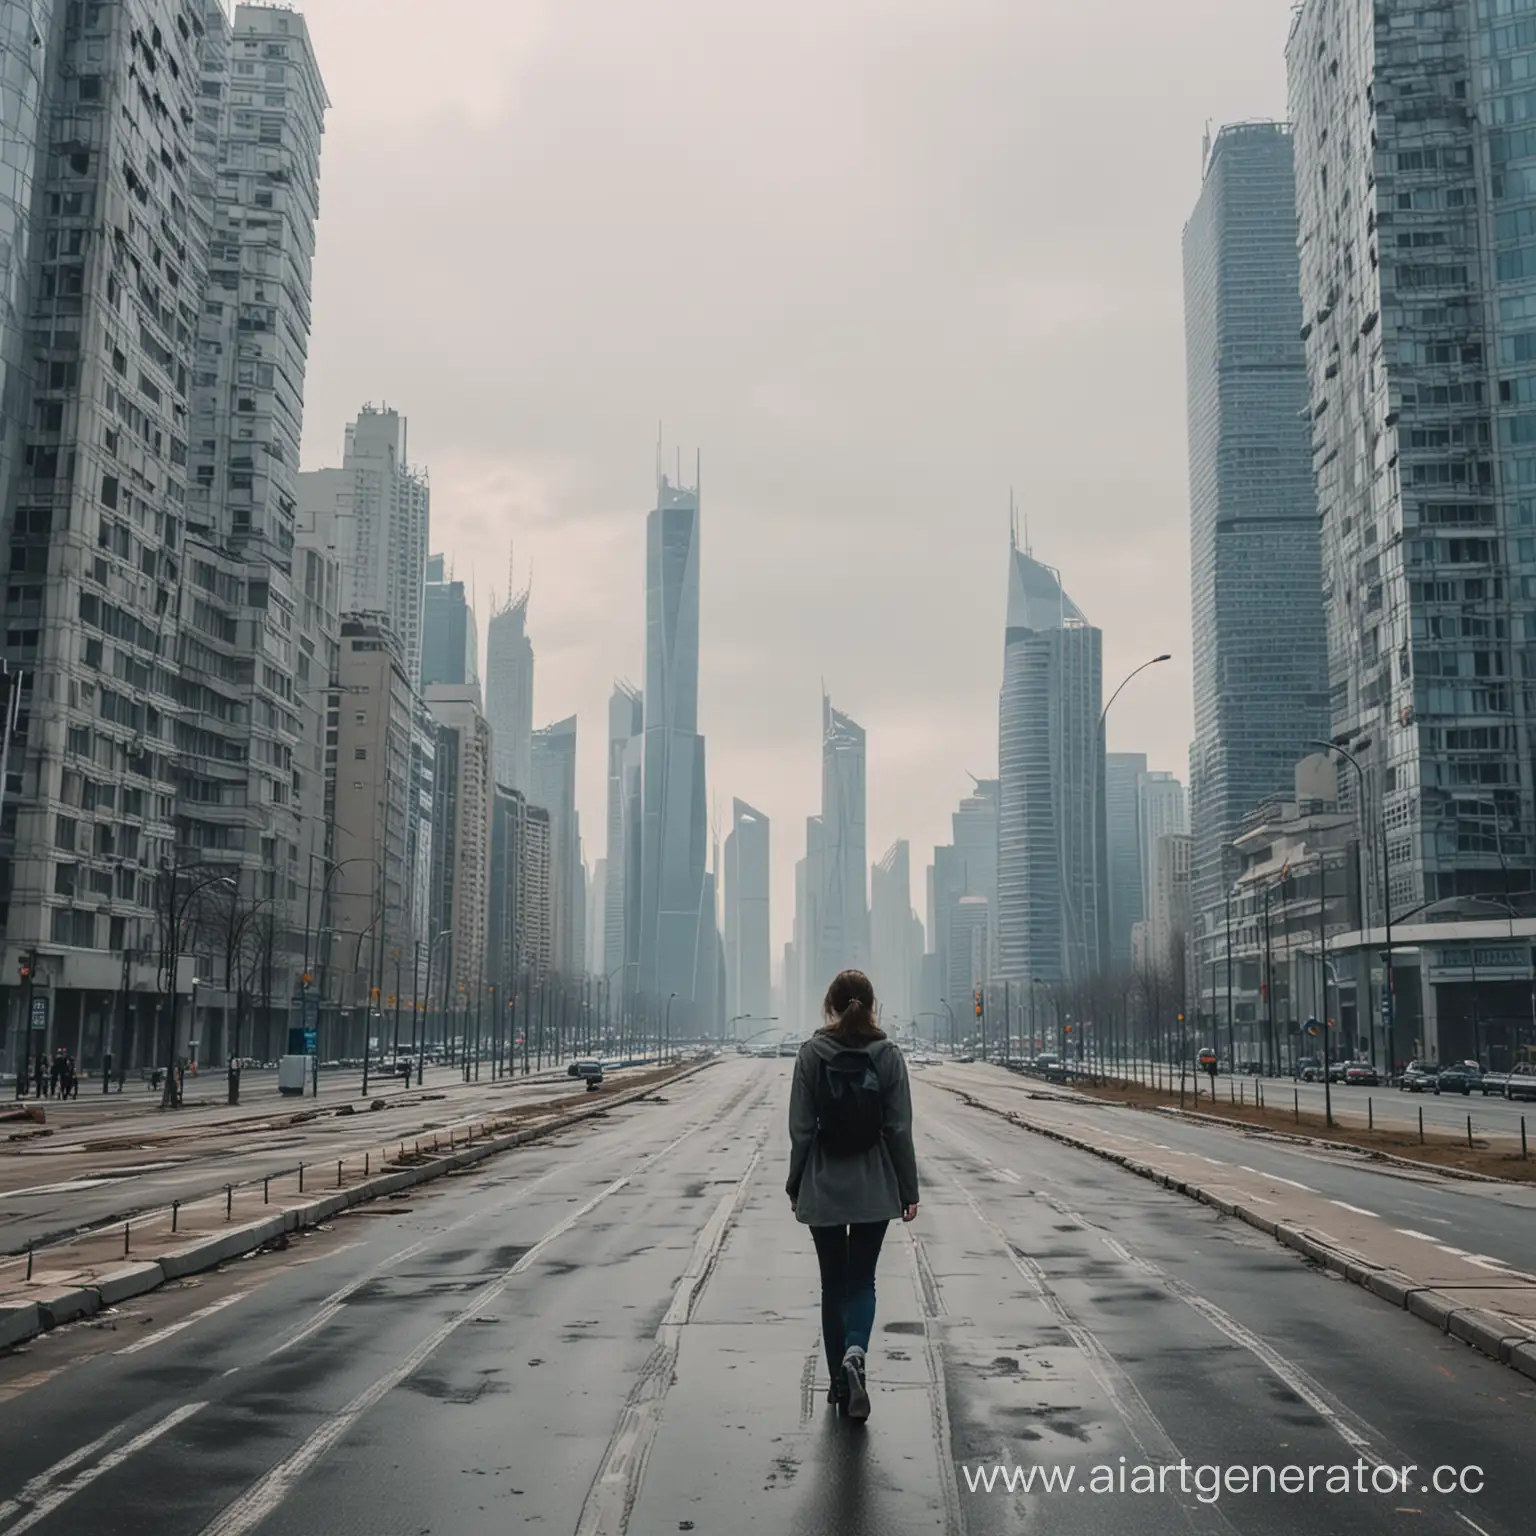 Young-Girl-Walking-Alone-in-Urban-Megapolis-During-Daytime